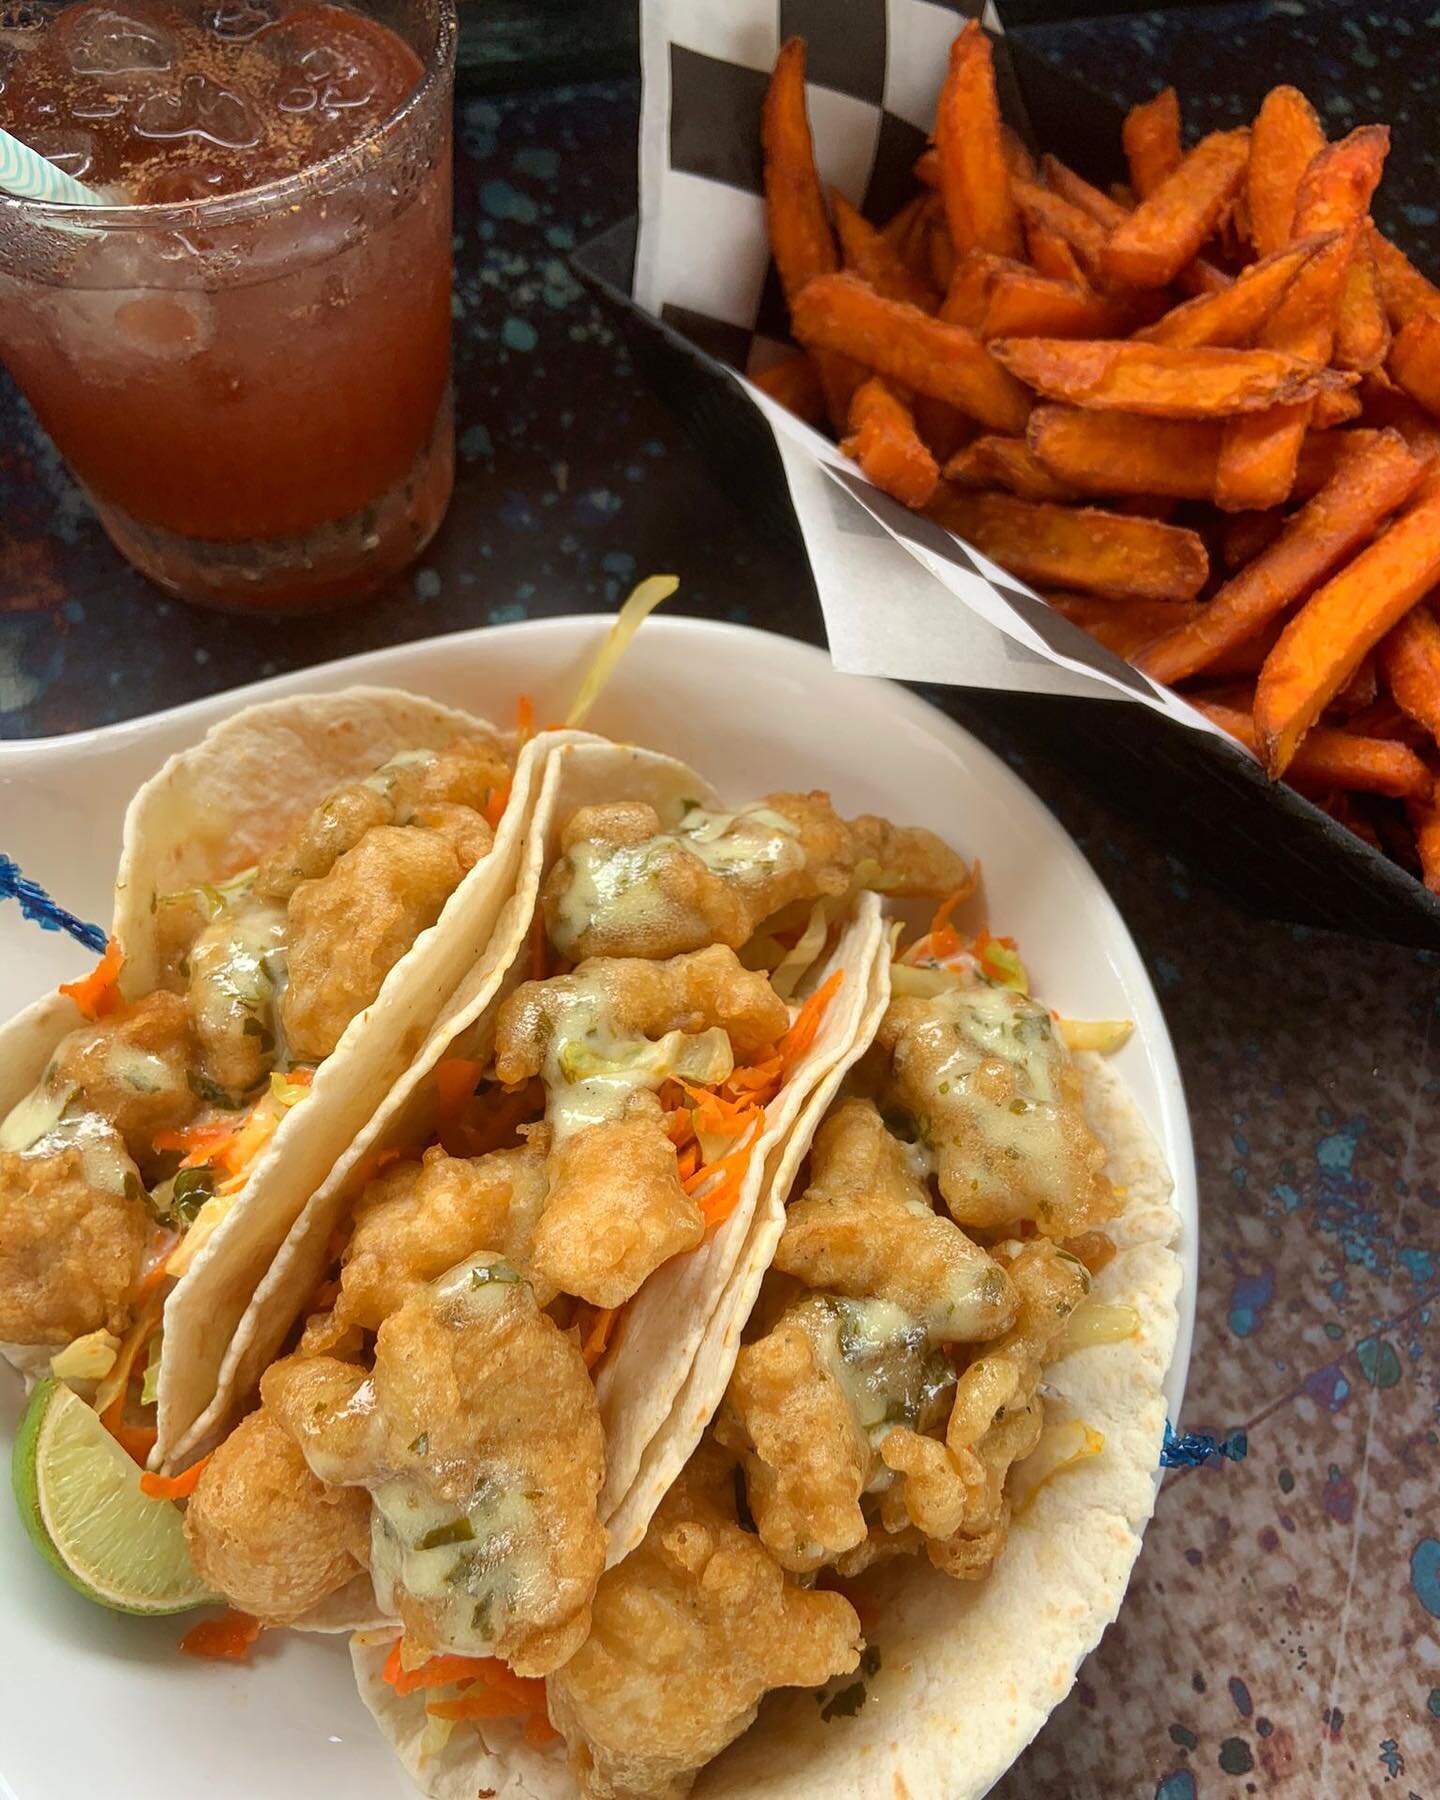 A perfect Monday trio 😍😍
.
Crispy Fish Tacos 🌮, Sweet Potato Fries 🍟 and Monday&rsquo;s $10 Daily Cocktail Special: our classic Rum Punch! 🍹
.
#EatDrinkLime #umbrellasbeachbar #grenada #beachbar #beach #bar #monday #food #fishtacos #fries #rumpu